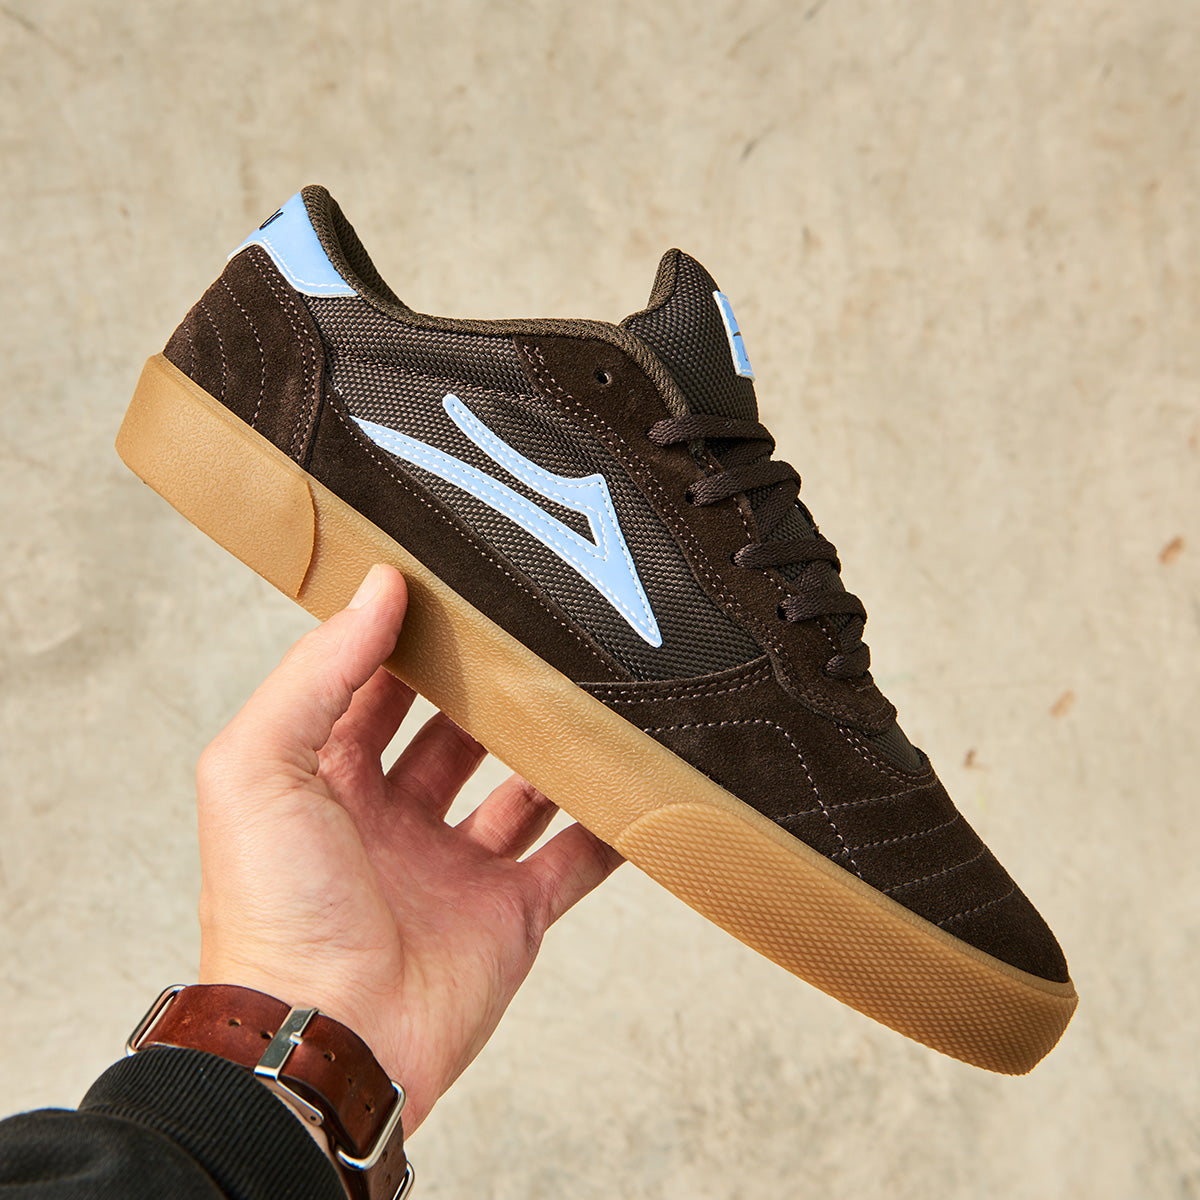 Lakai Cambridge Skate Shoes - Chocolate/Light Blue UV Suede 10